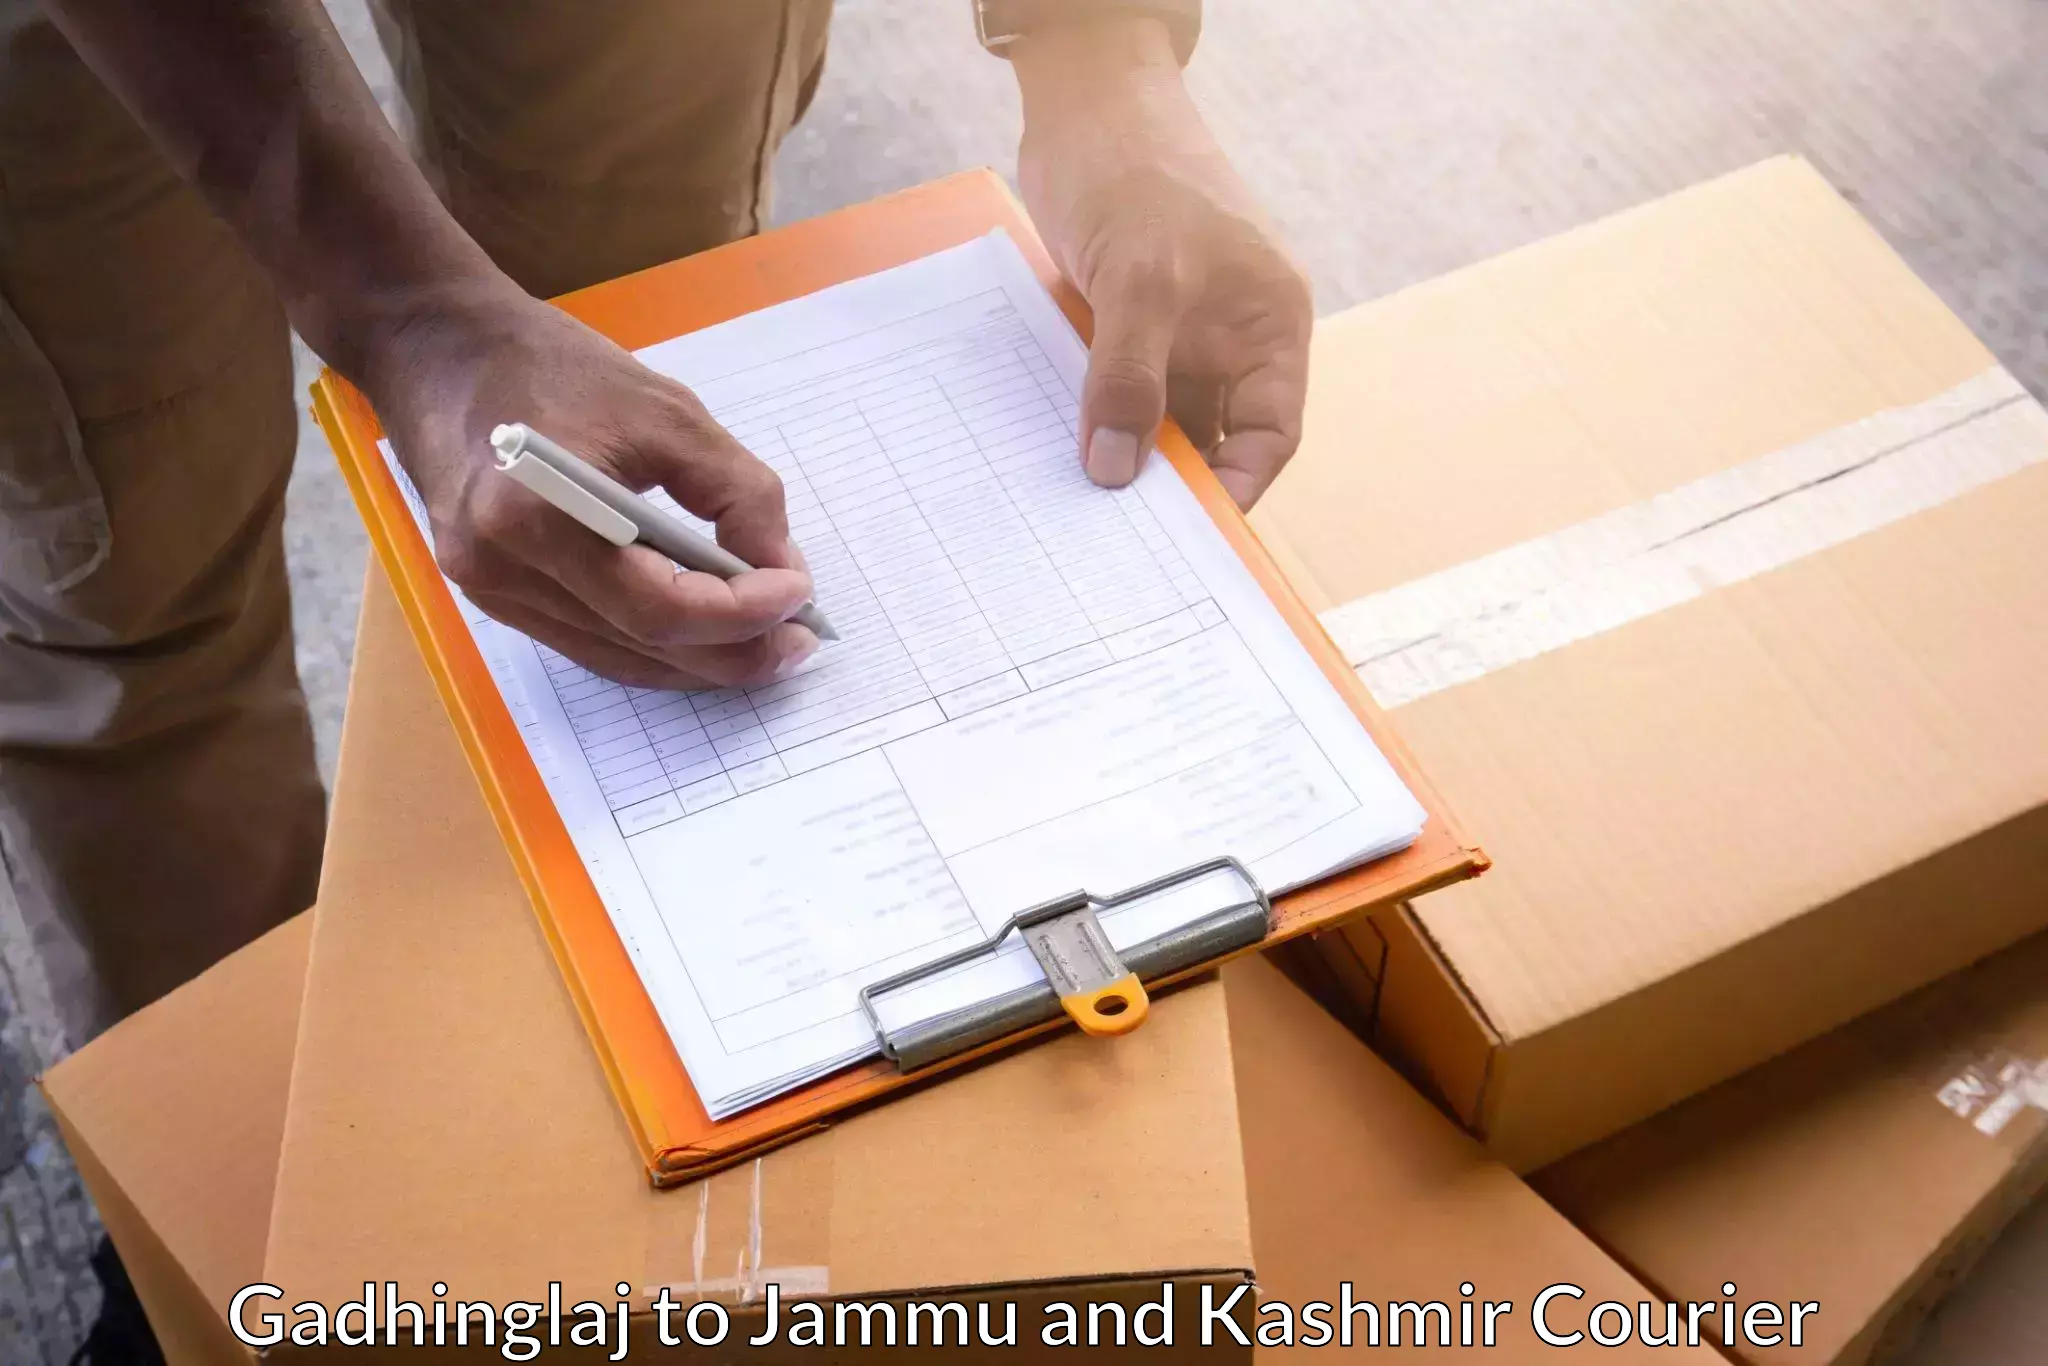 Multi-service courier options Gadhinglaj to Leh